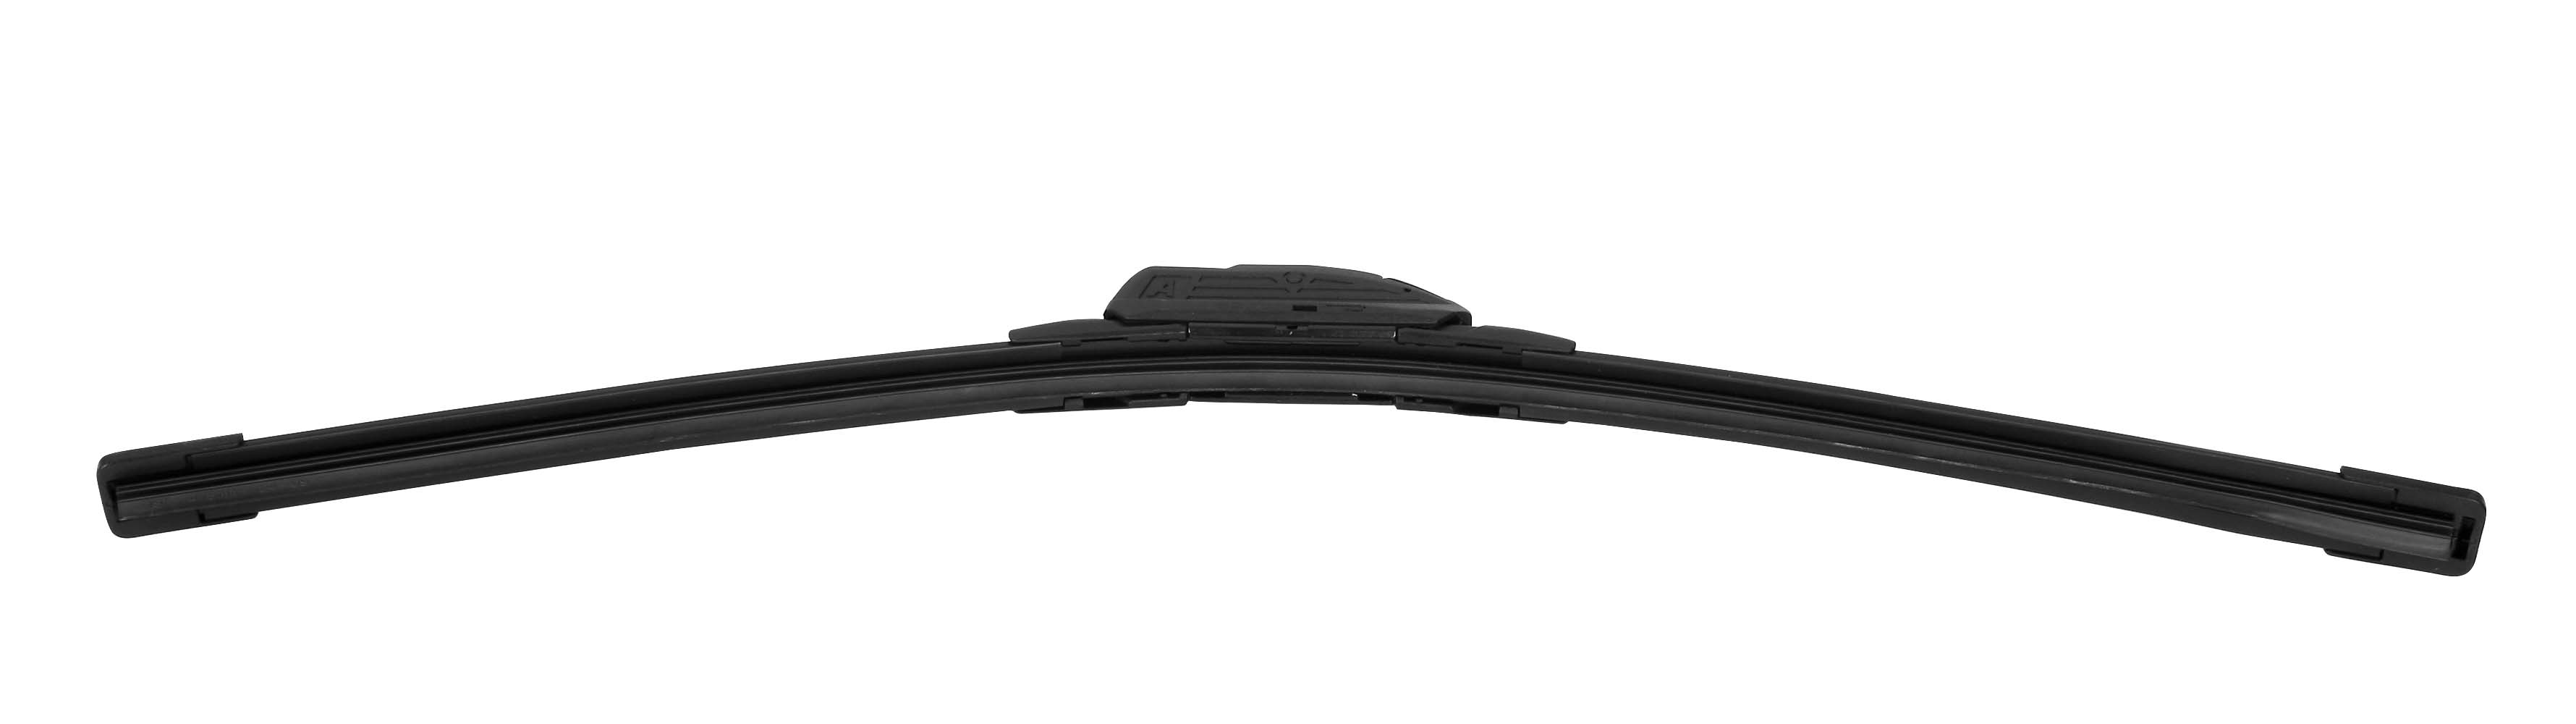 Filson wiper blade 8 adaptors 48 cm (19“) - 1 pcs thumb